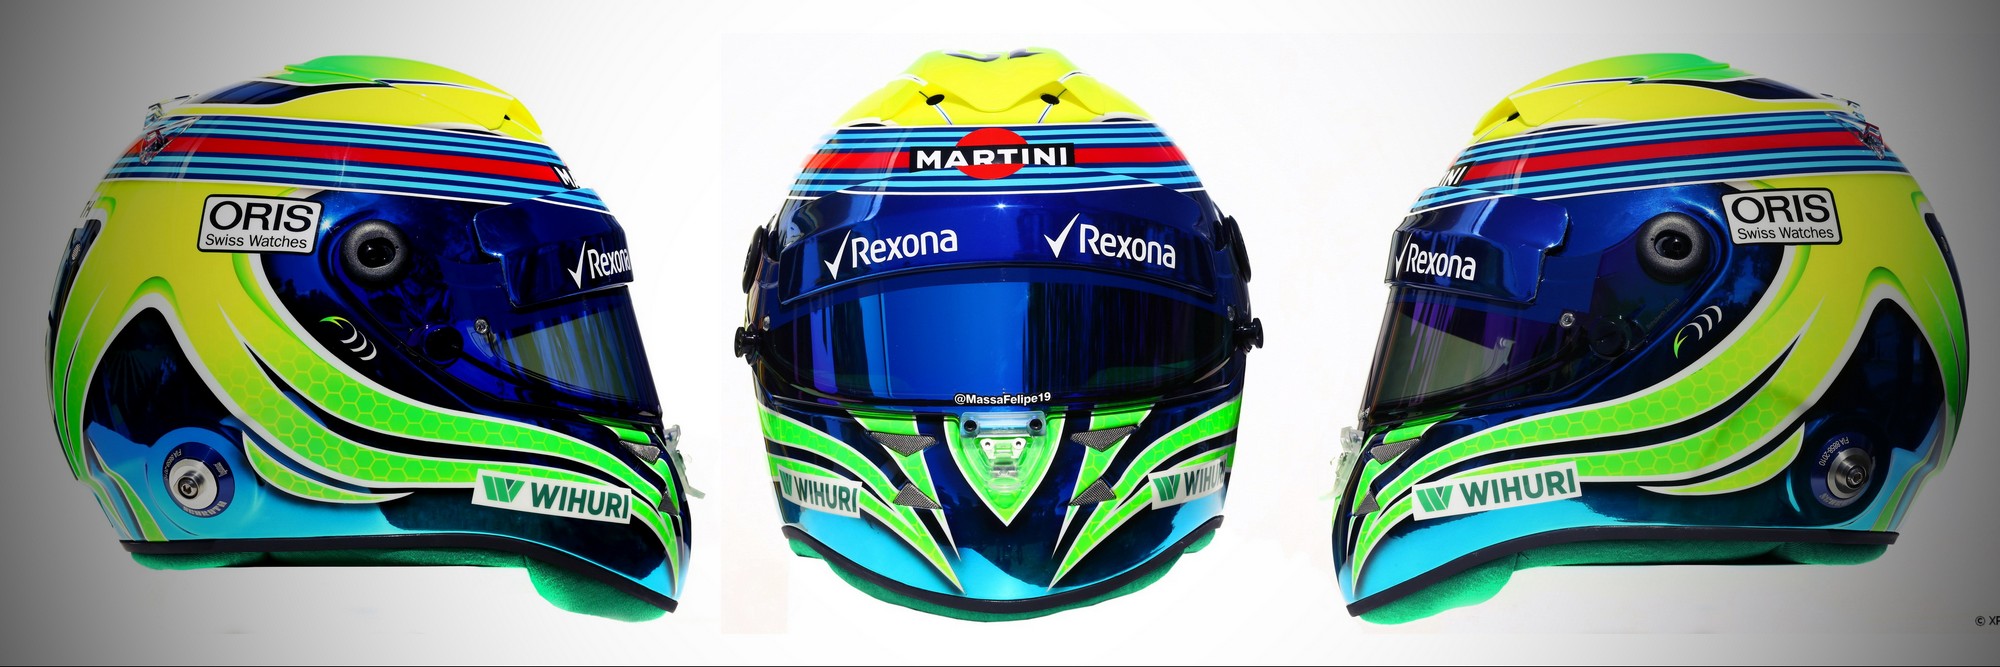 Шлем Фелипе Массы на сезон 2016 года | 2016 helmet of Felipe Massa